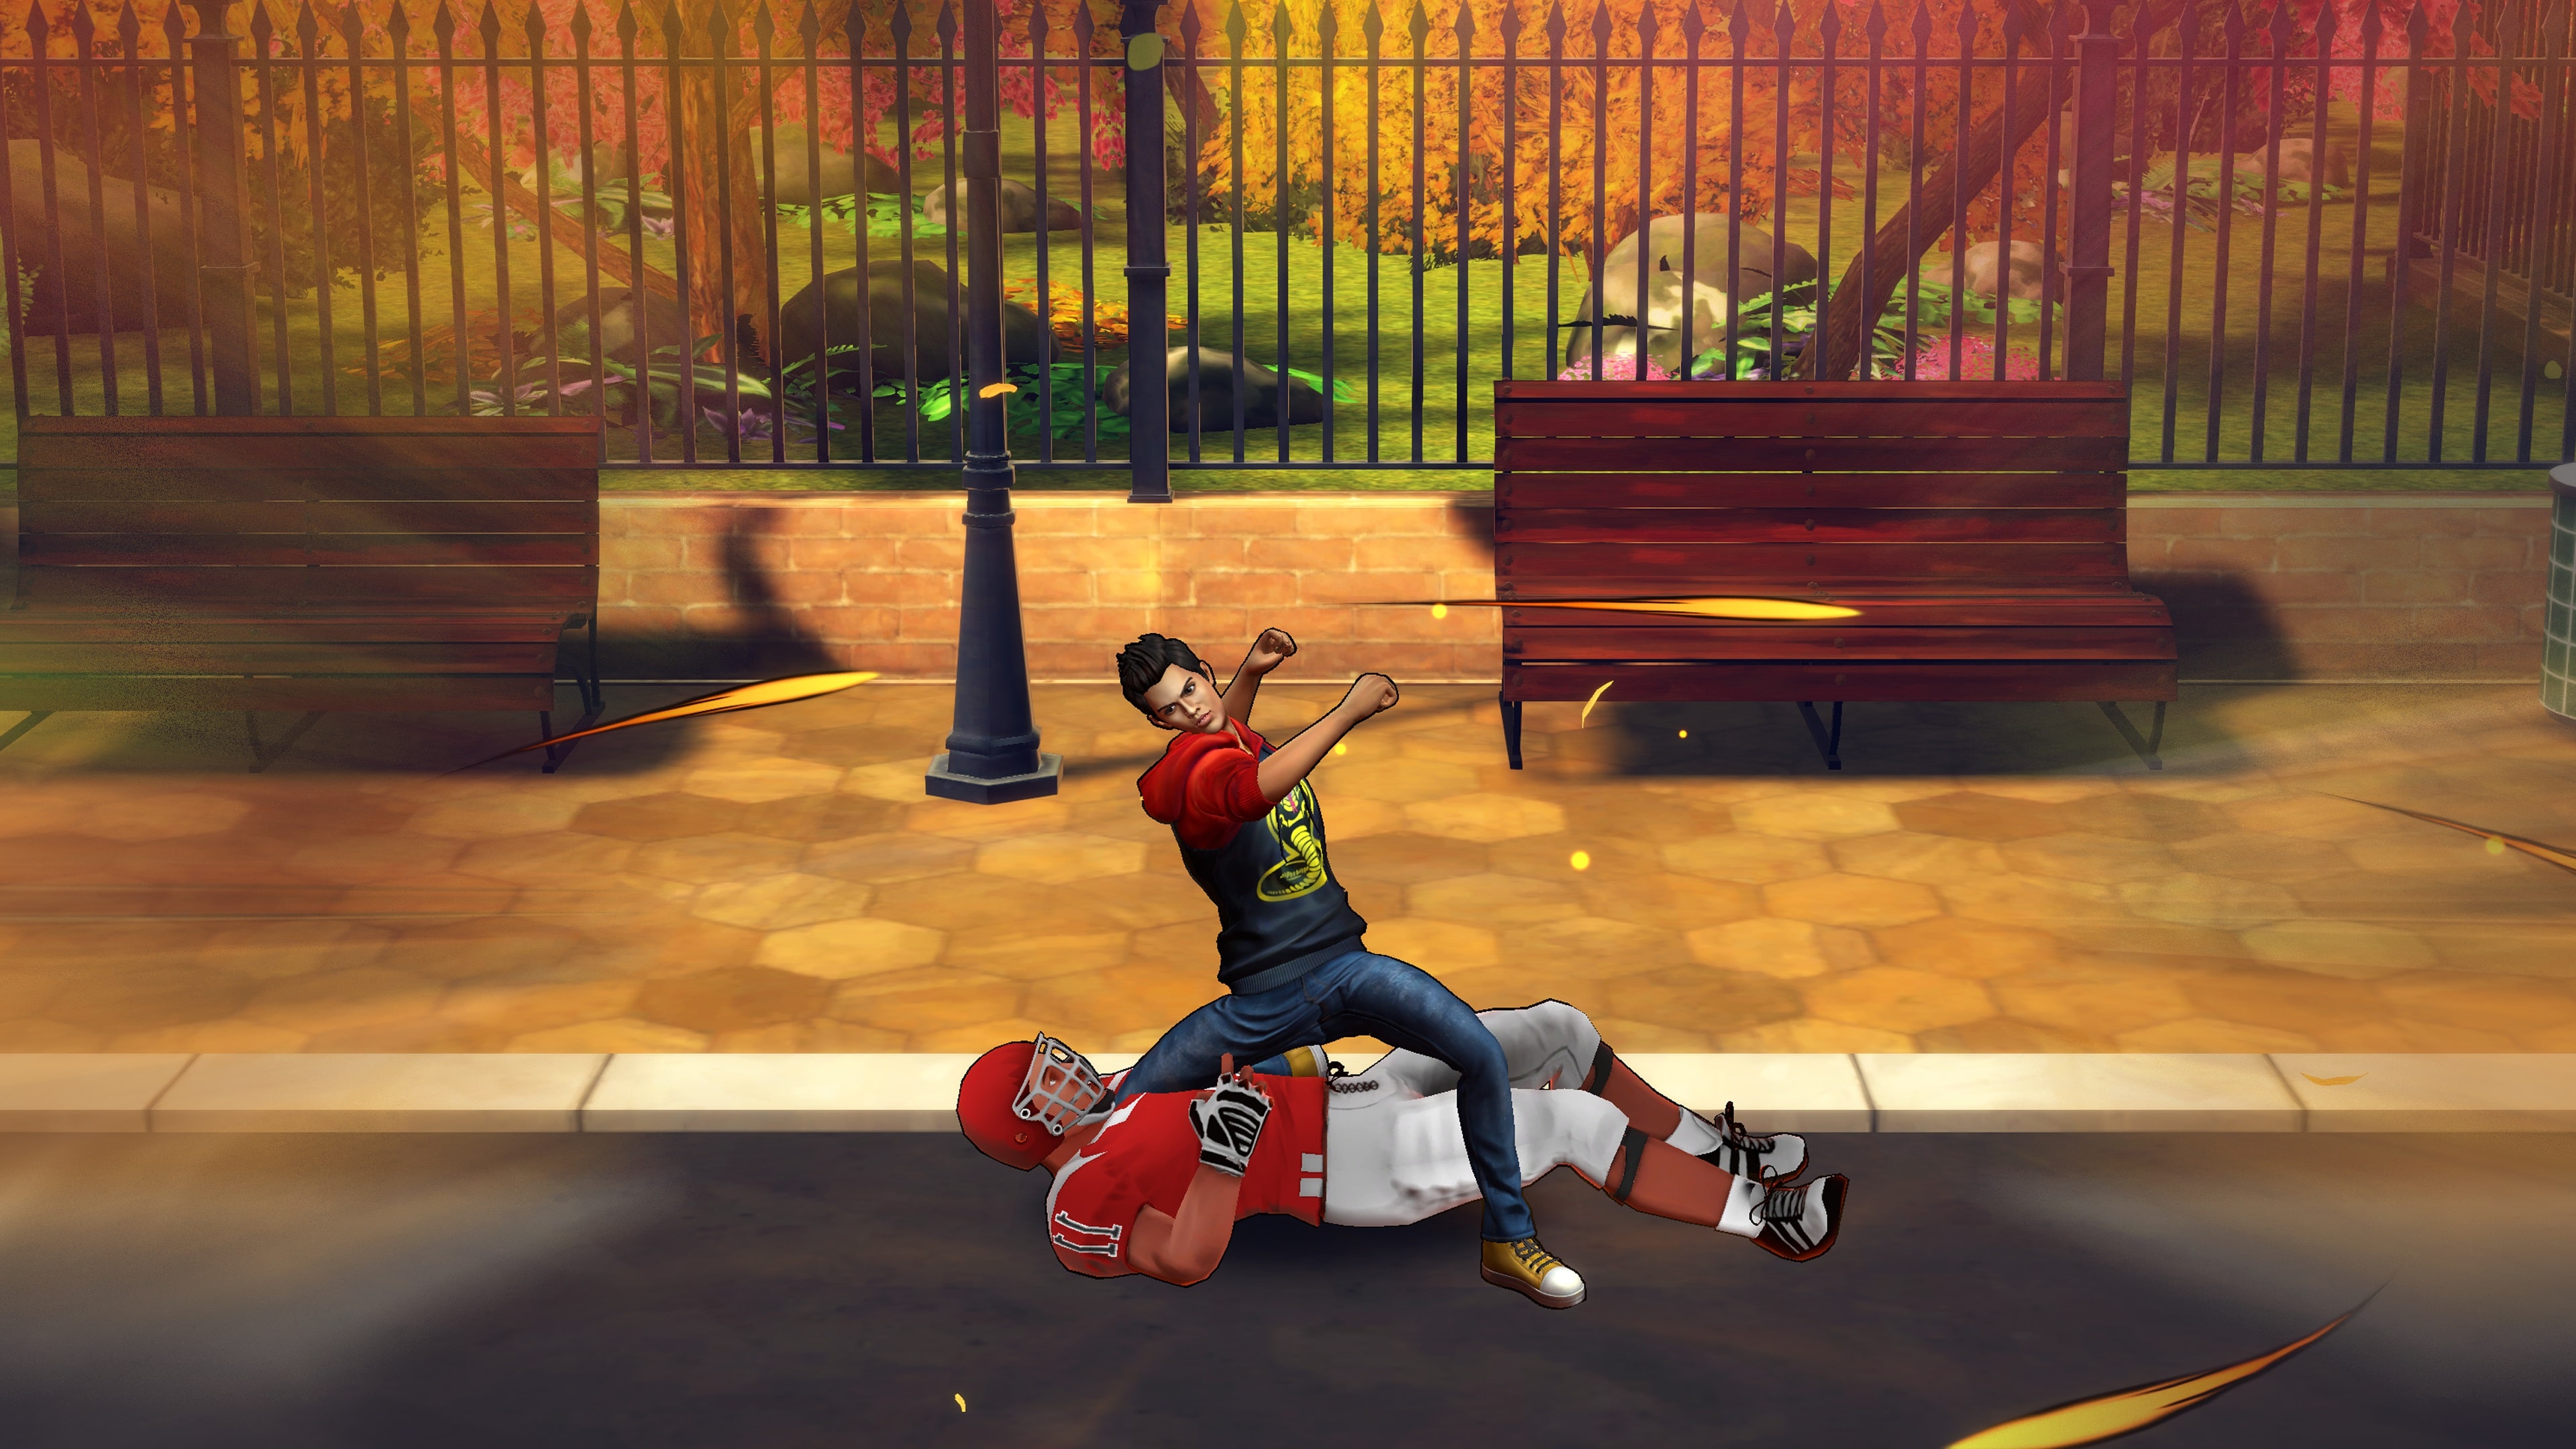 Jogo PS4 Cobra Kai: The Karate Saga Continues